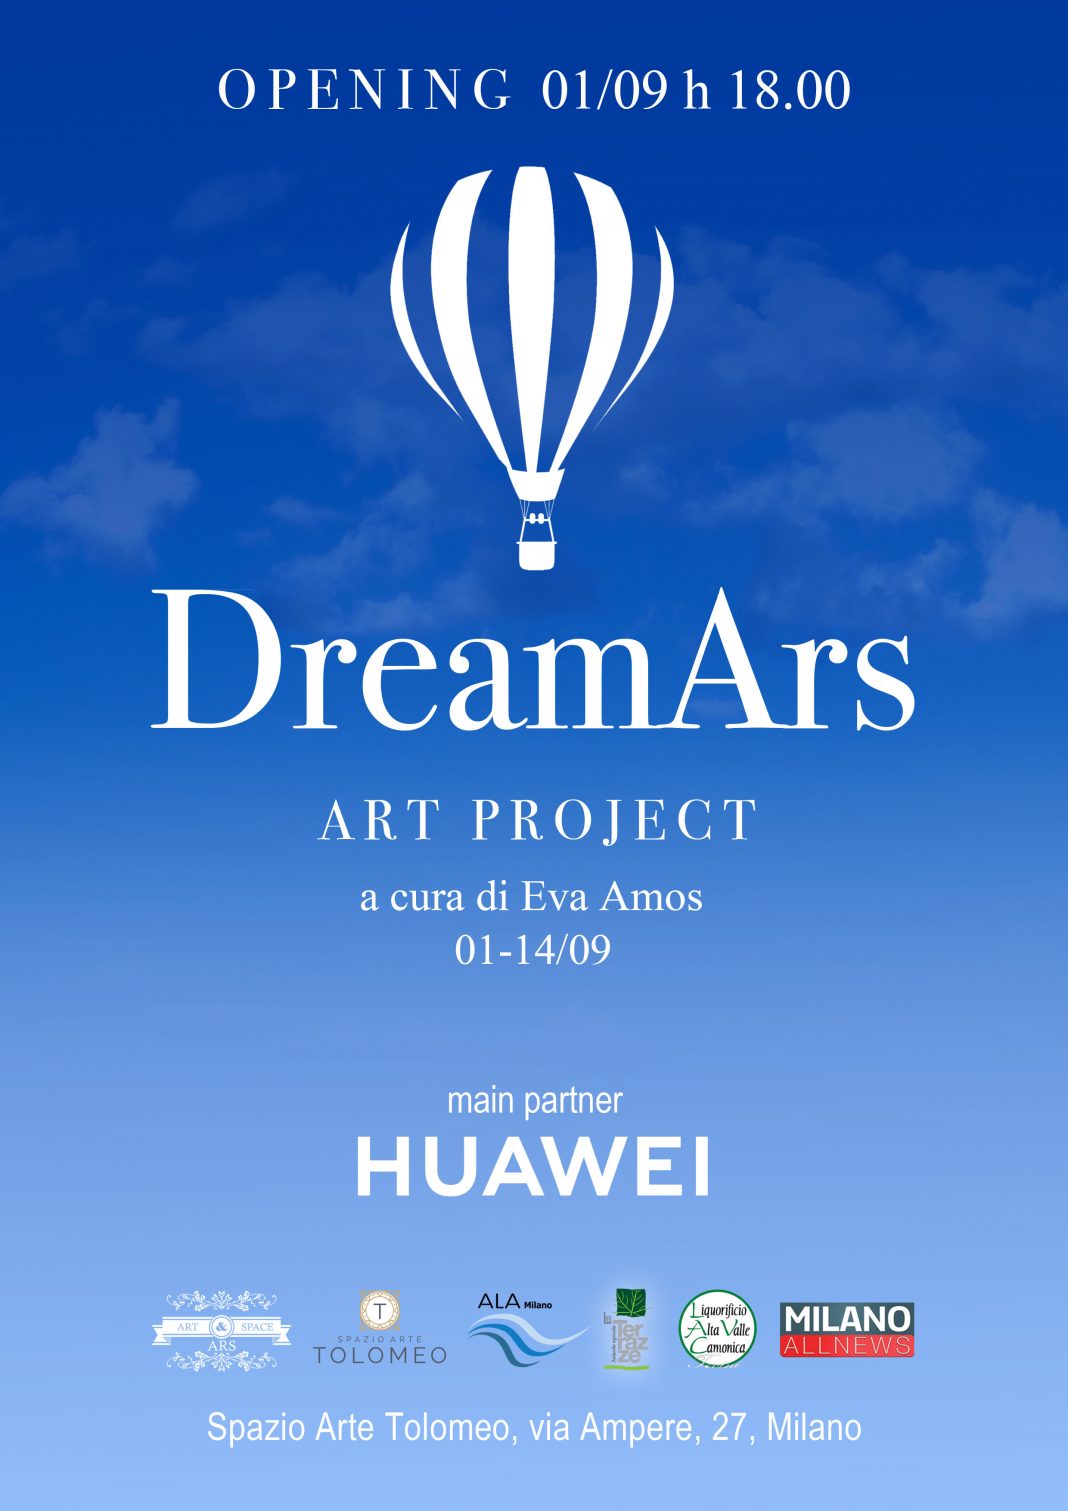 DreamArshttps://www.exibart.com/repository/media/formidable/11/dreamars-logo-1068x1511.jpg